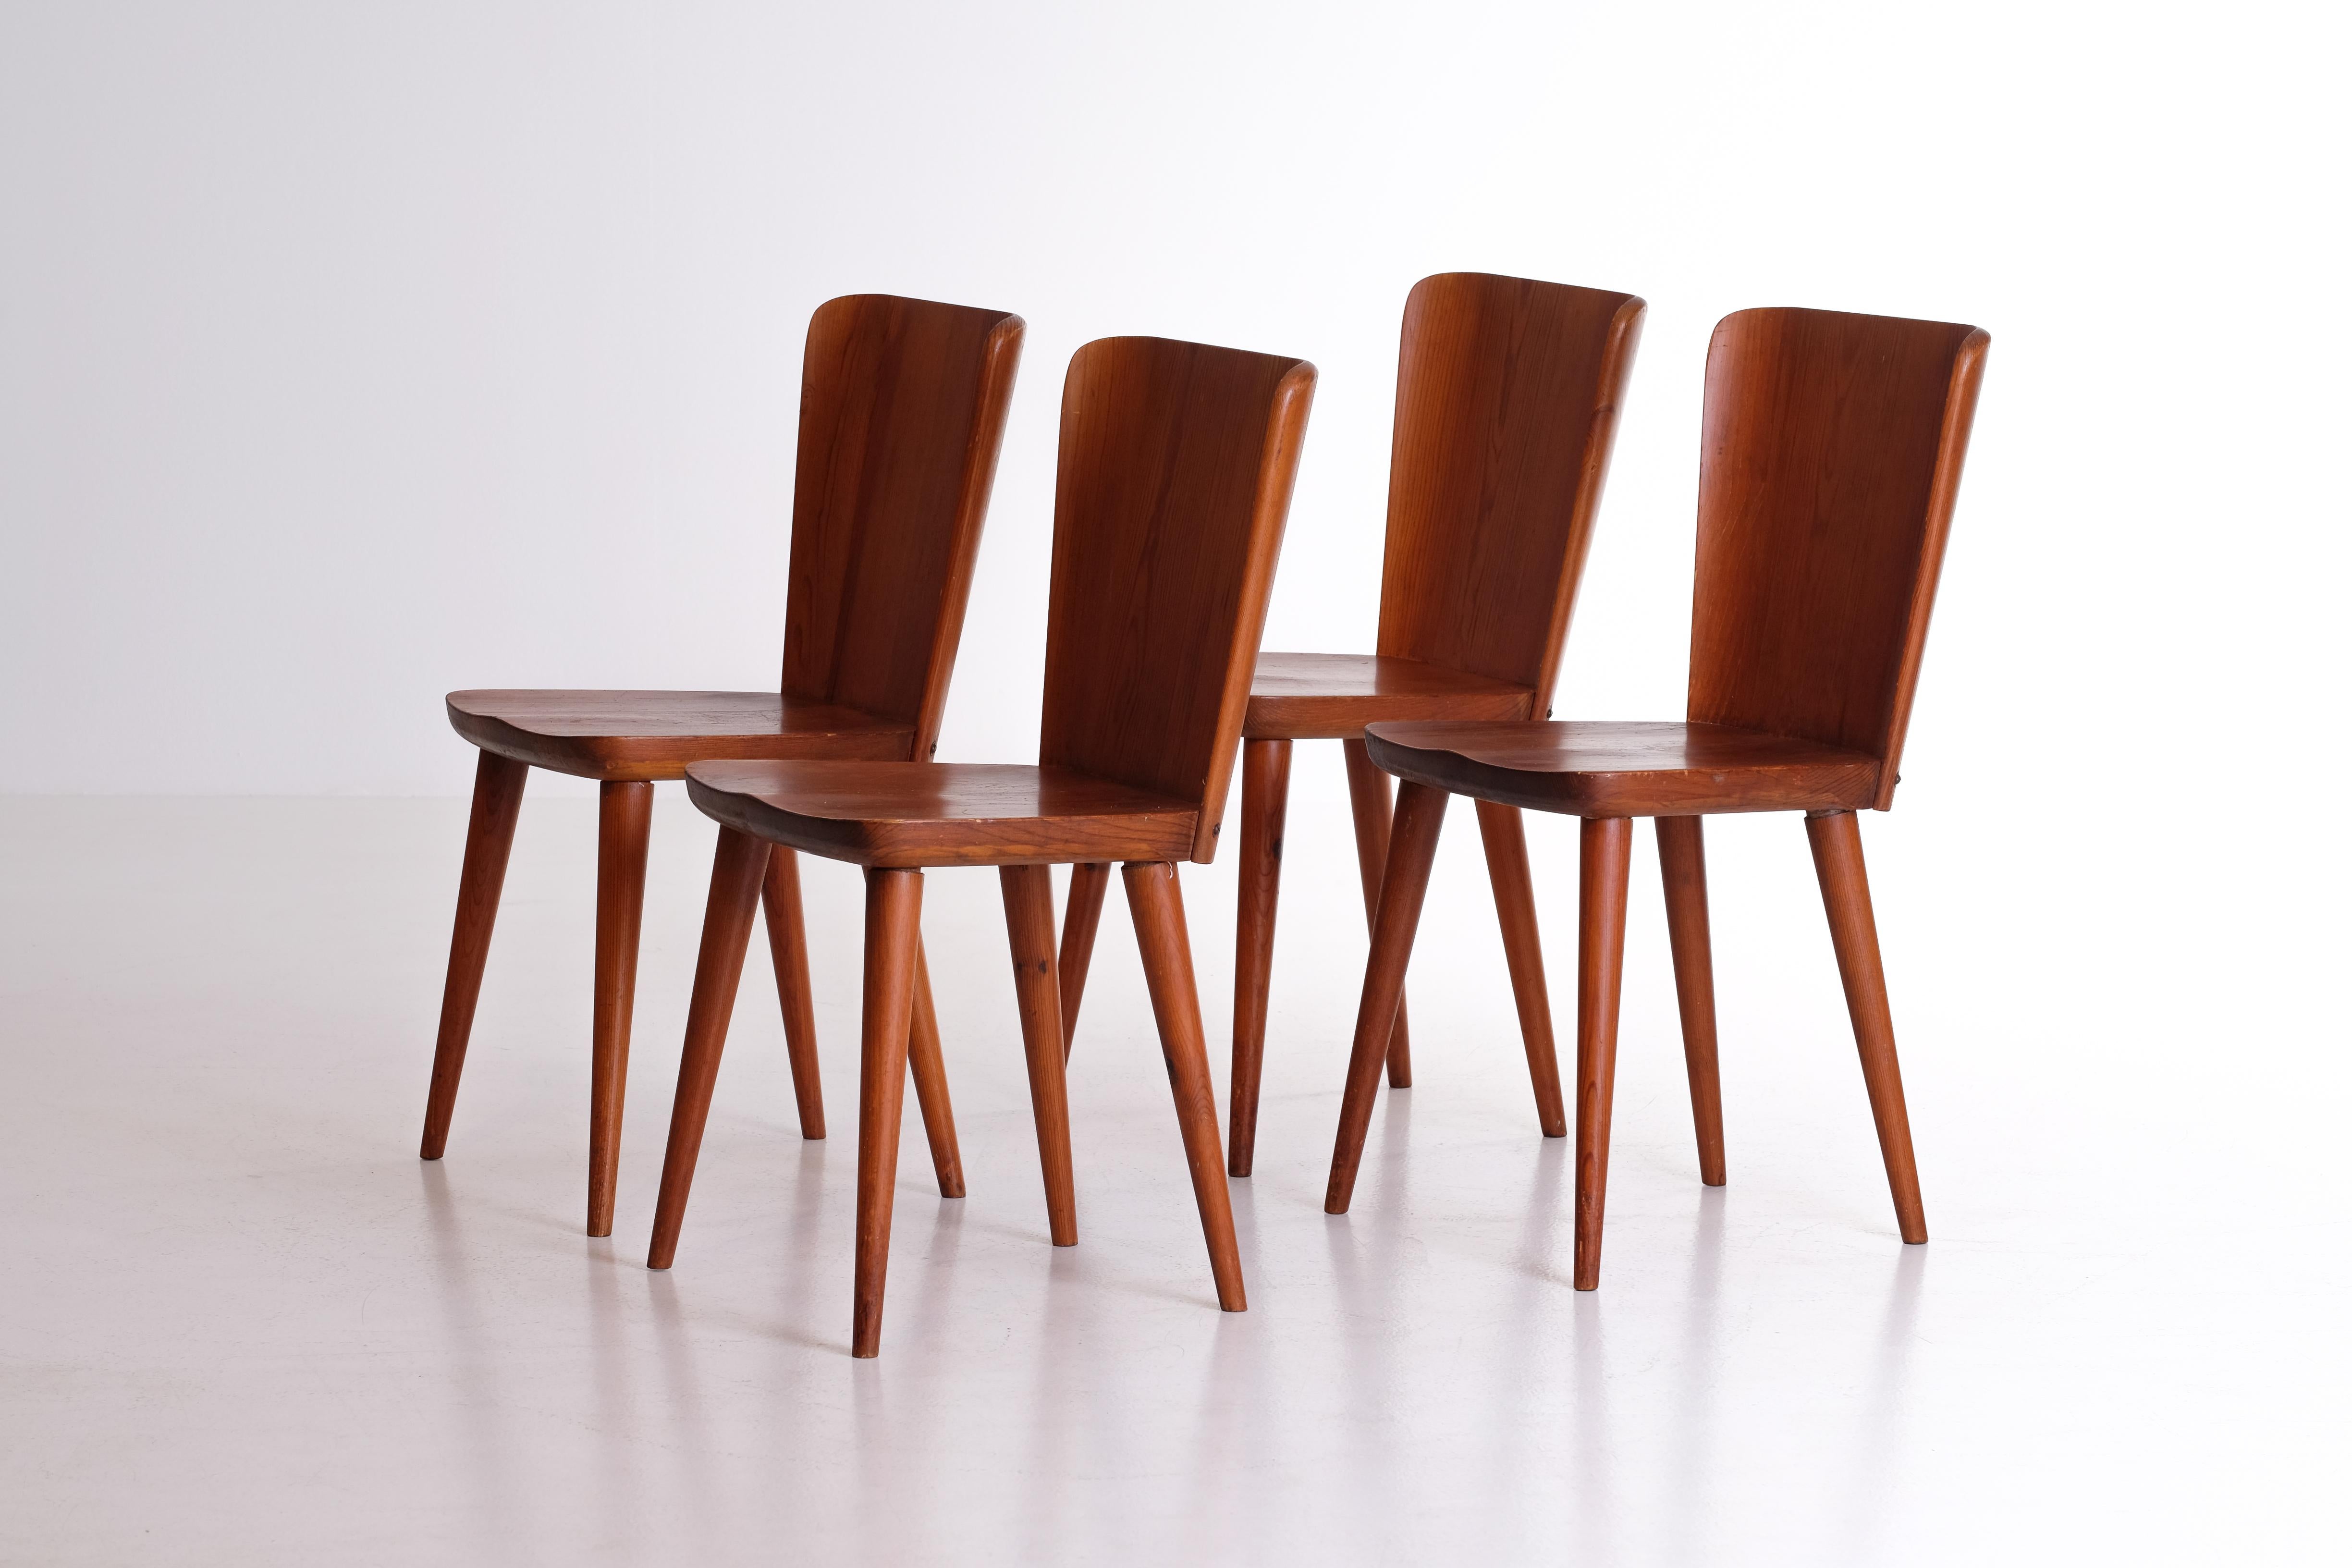 Set of 4 Swedish Pine Chairs by Göran Malmvall, Svensk Fur, 1960s For Sale 2